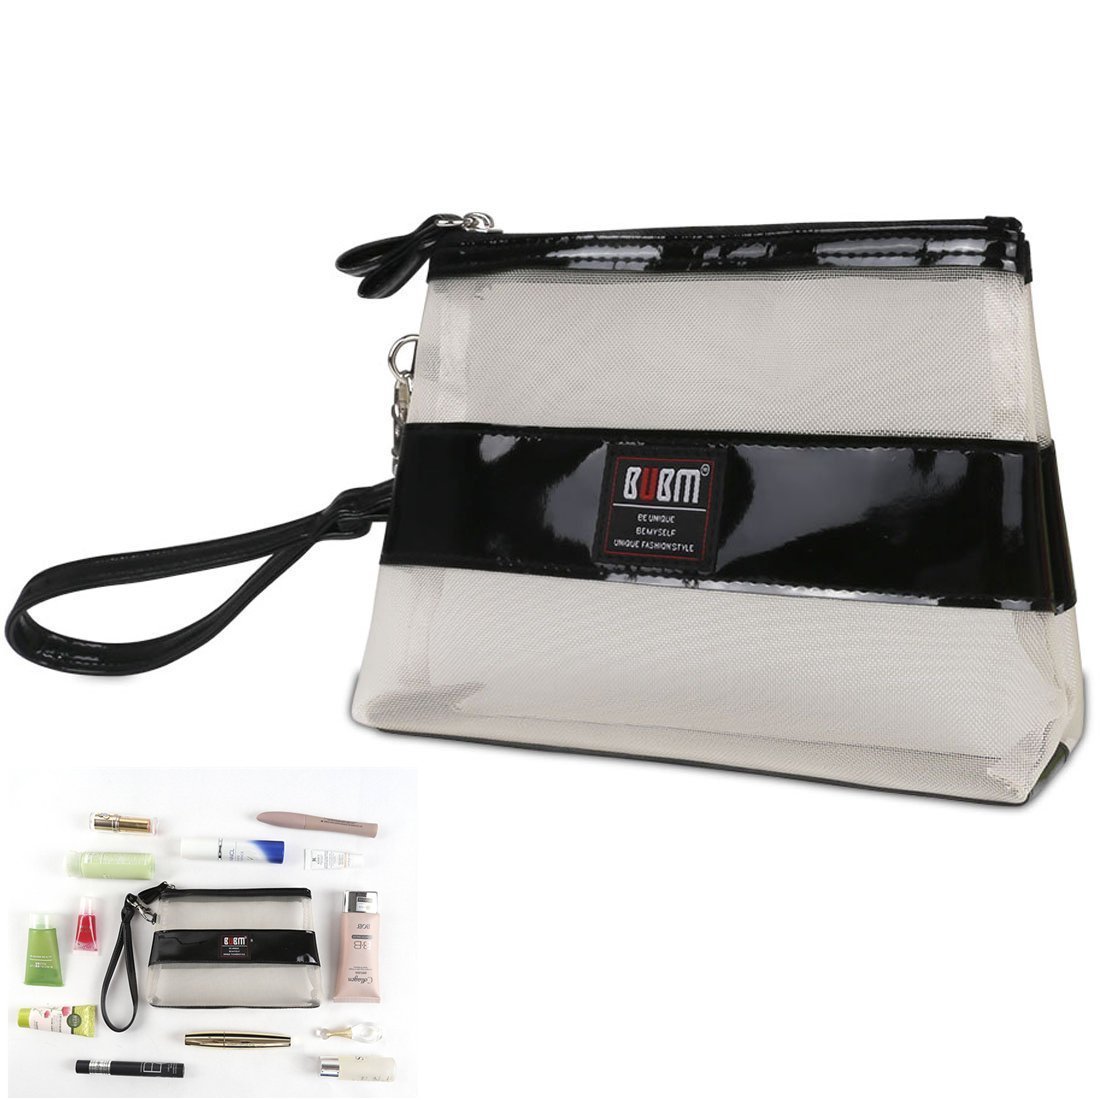 BUBM TSH Portable Toiletry Handbag Cosmetic Bag Makeup Storage Bags Pouch Women Travel Kit Organize 2